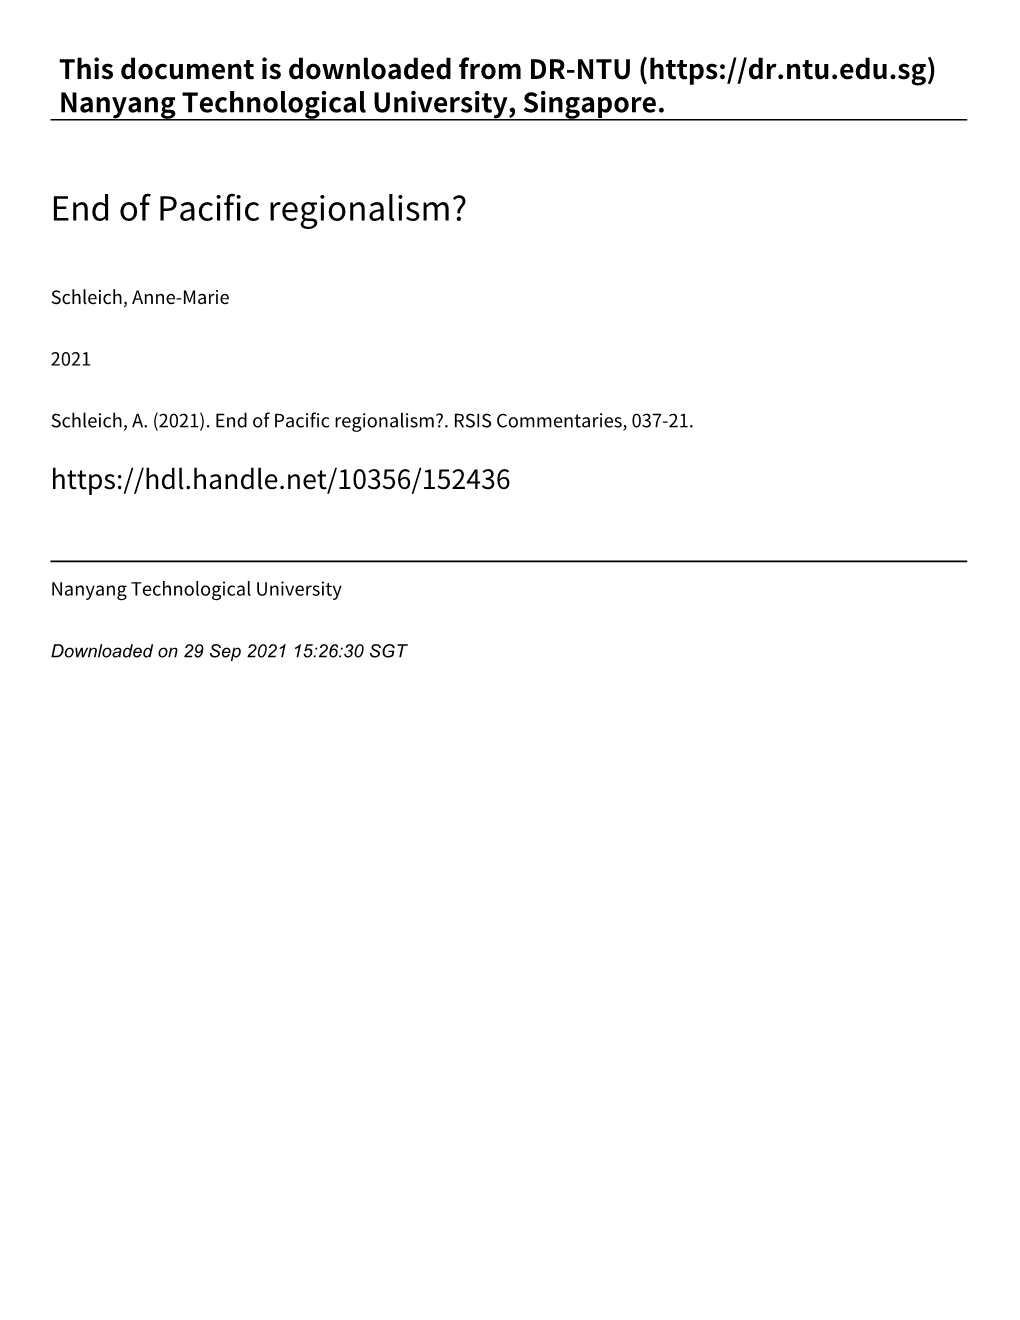 End of Pacific Regionalism?